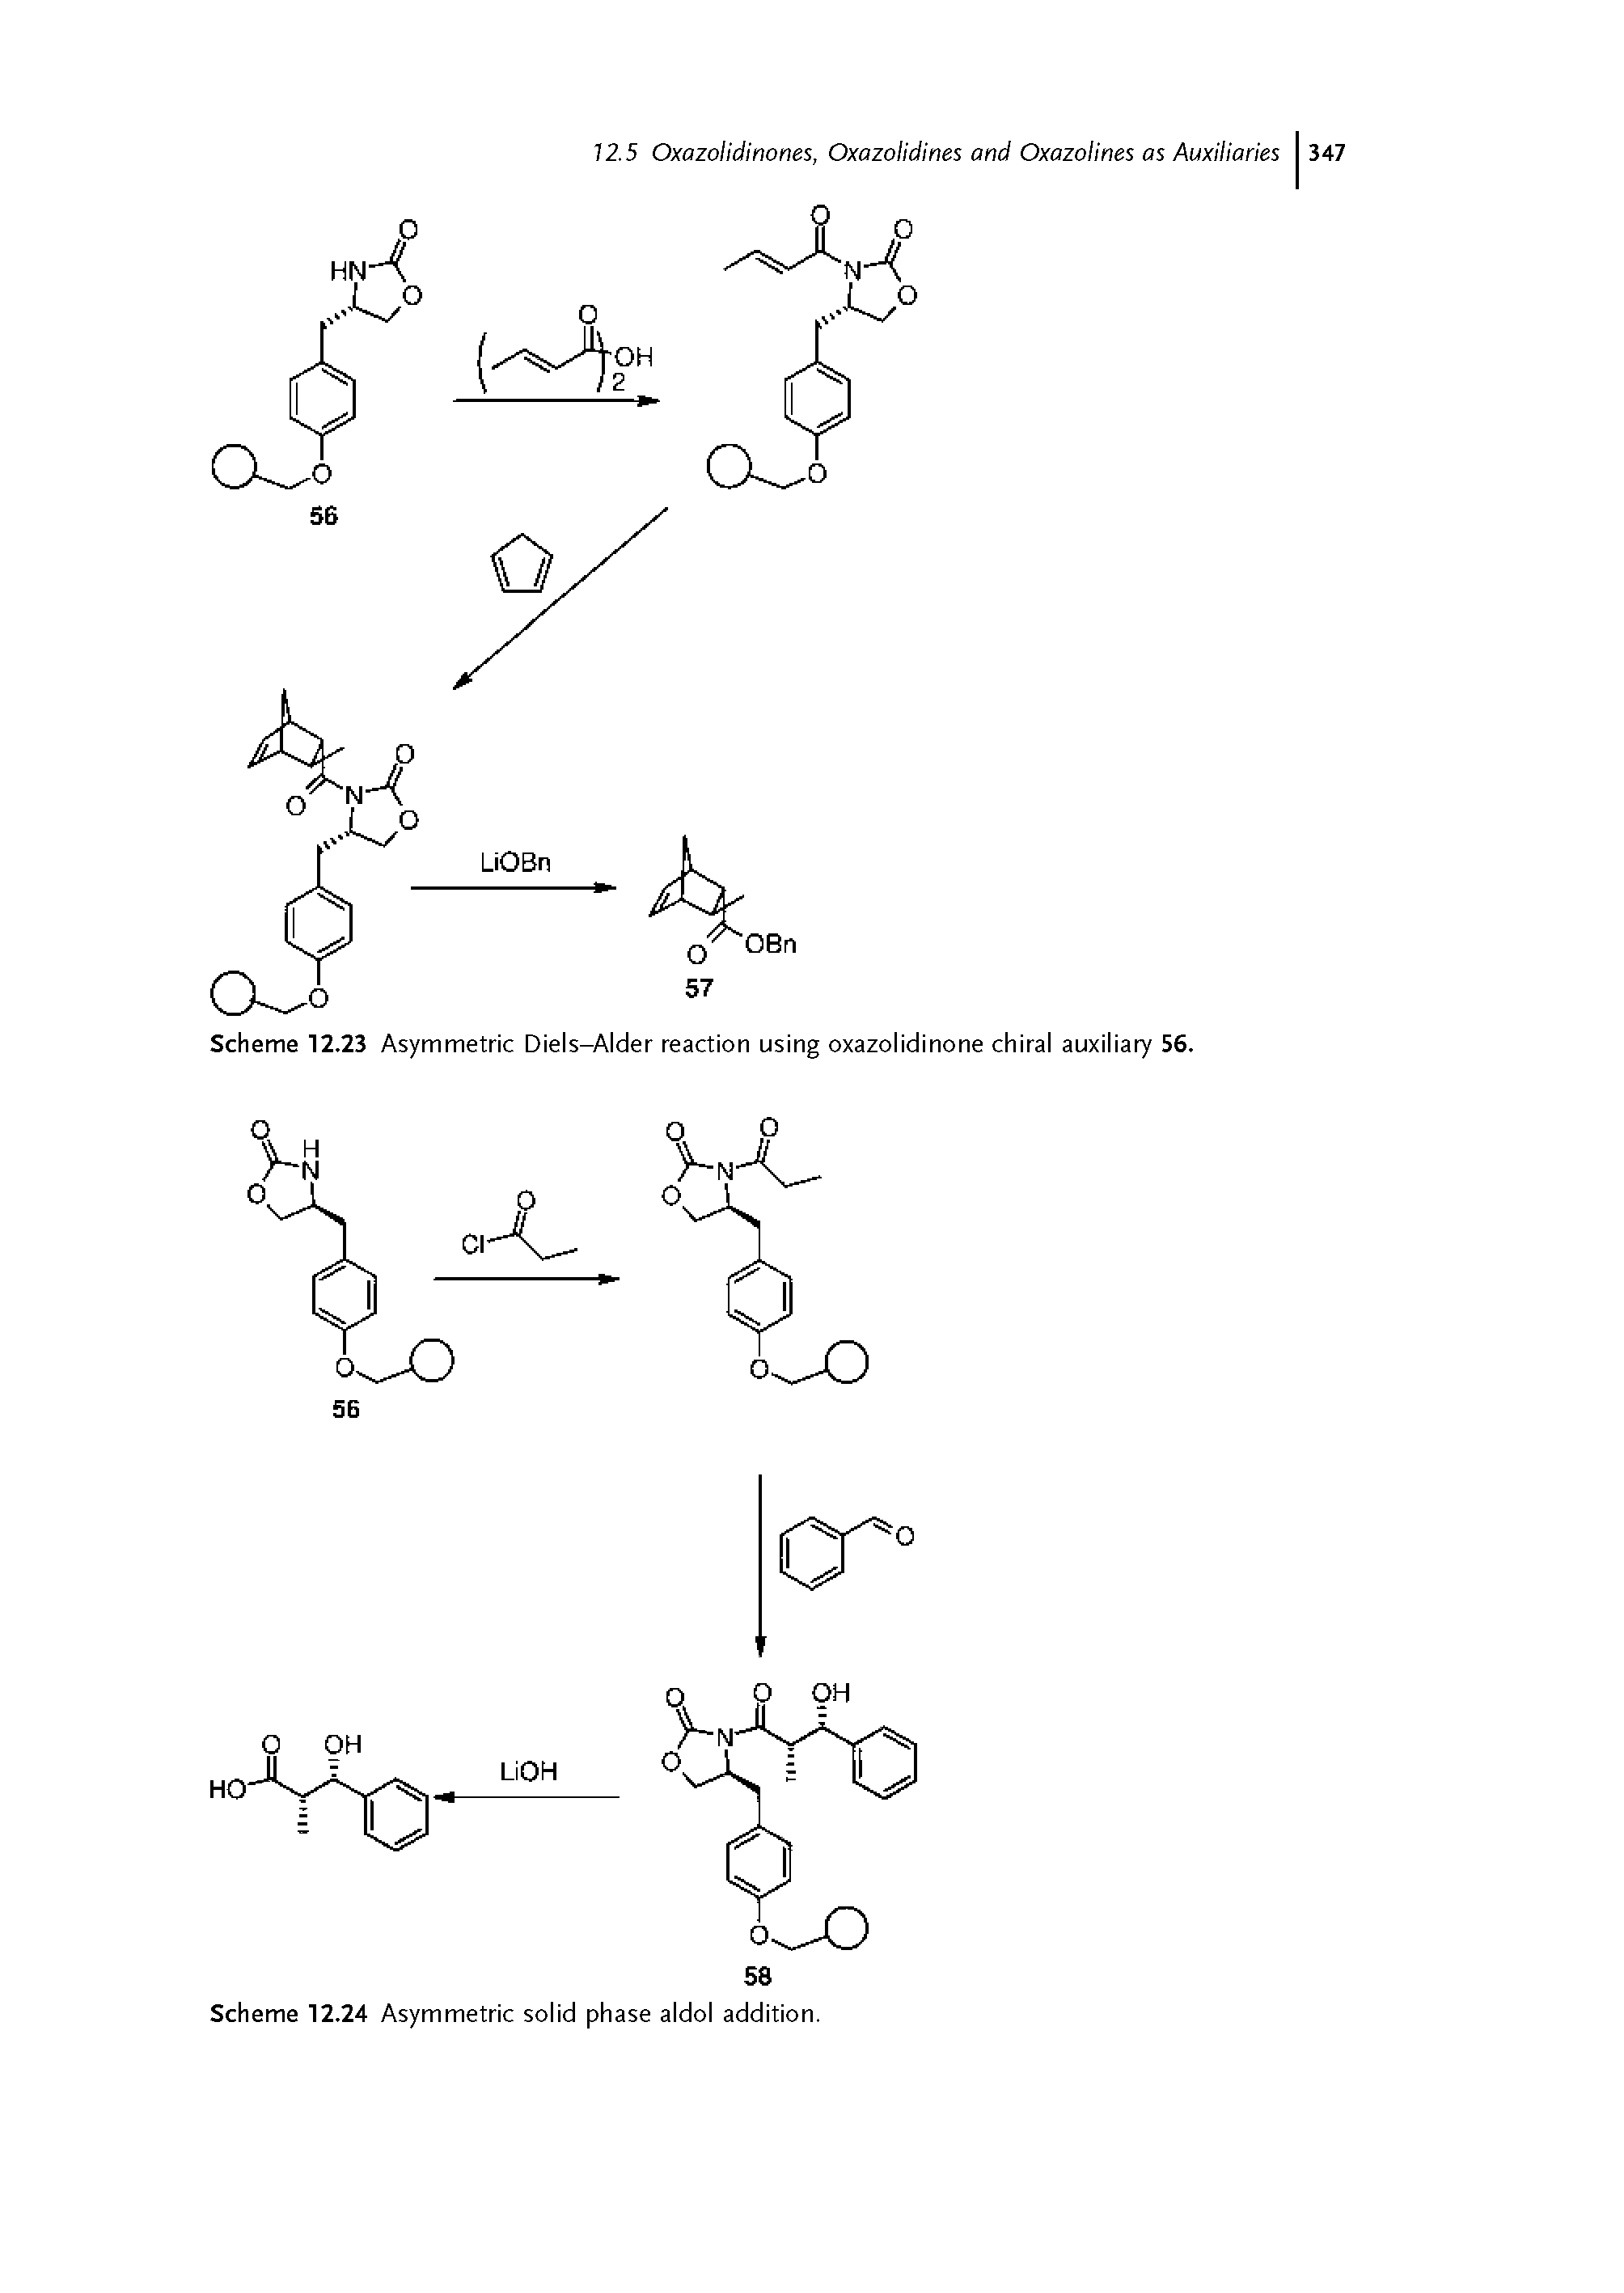 Scheme 12.23 Asymmetric Diels-Alder reaction using oxazolidinone chiral auxiliary 56.